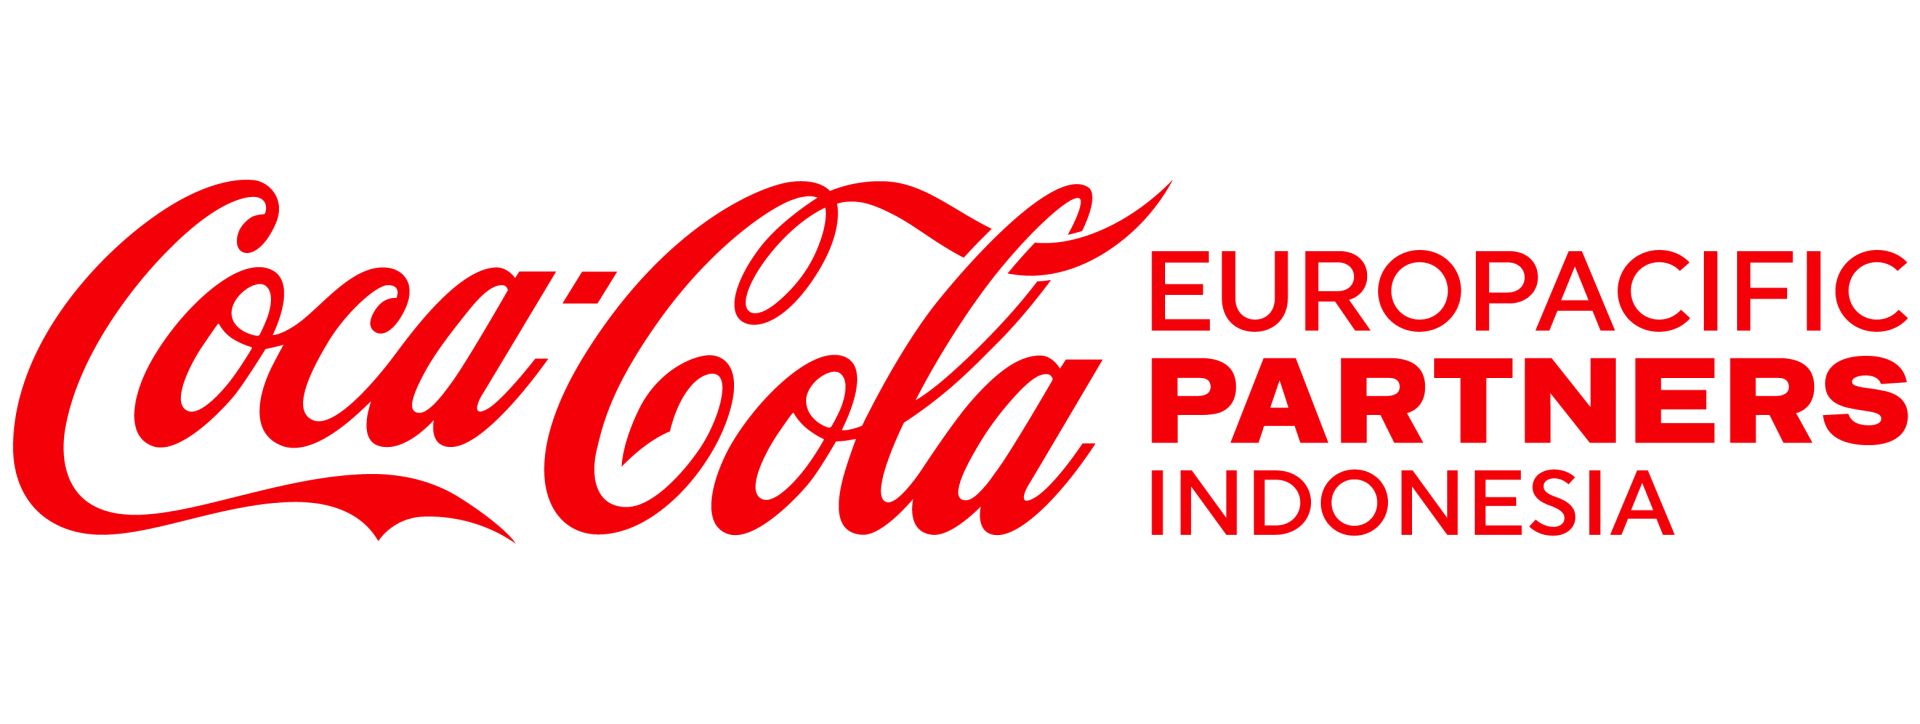 Coca-Cola Europacific Partners Indonesia